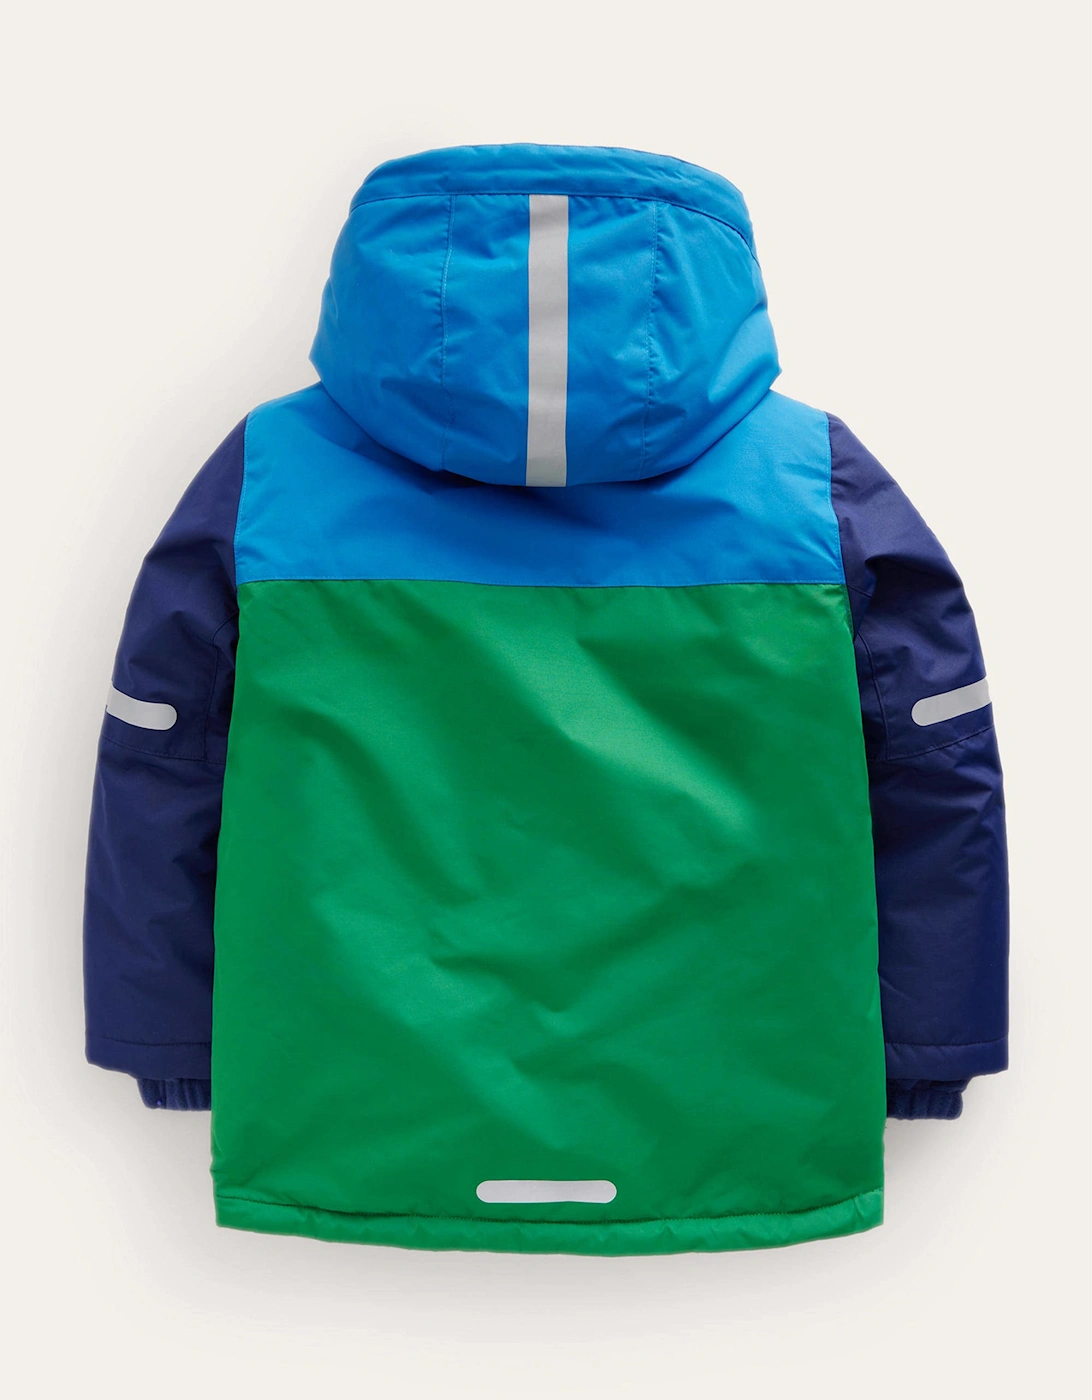 All-weather Waterproof Jacket